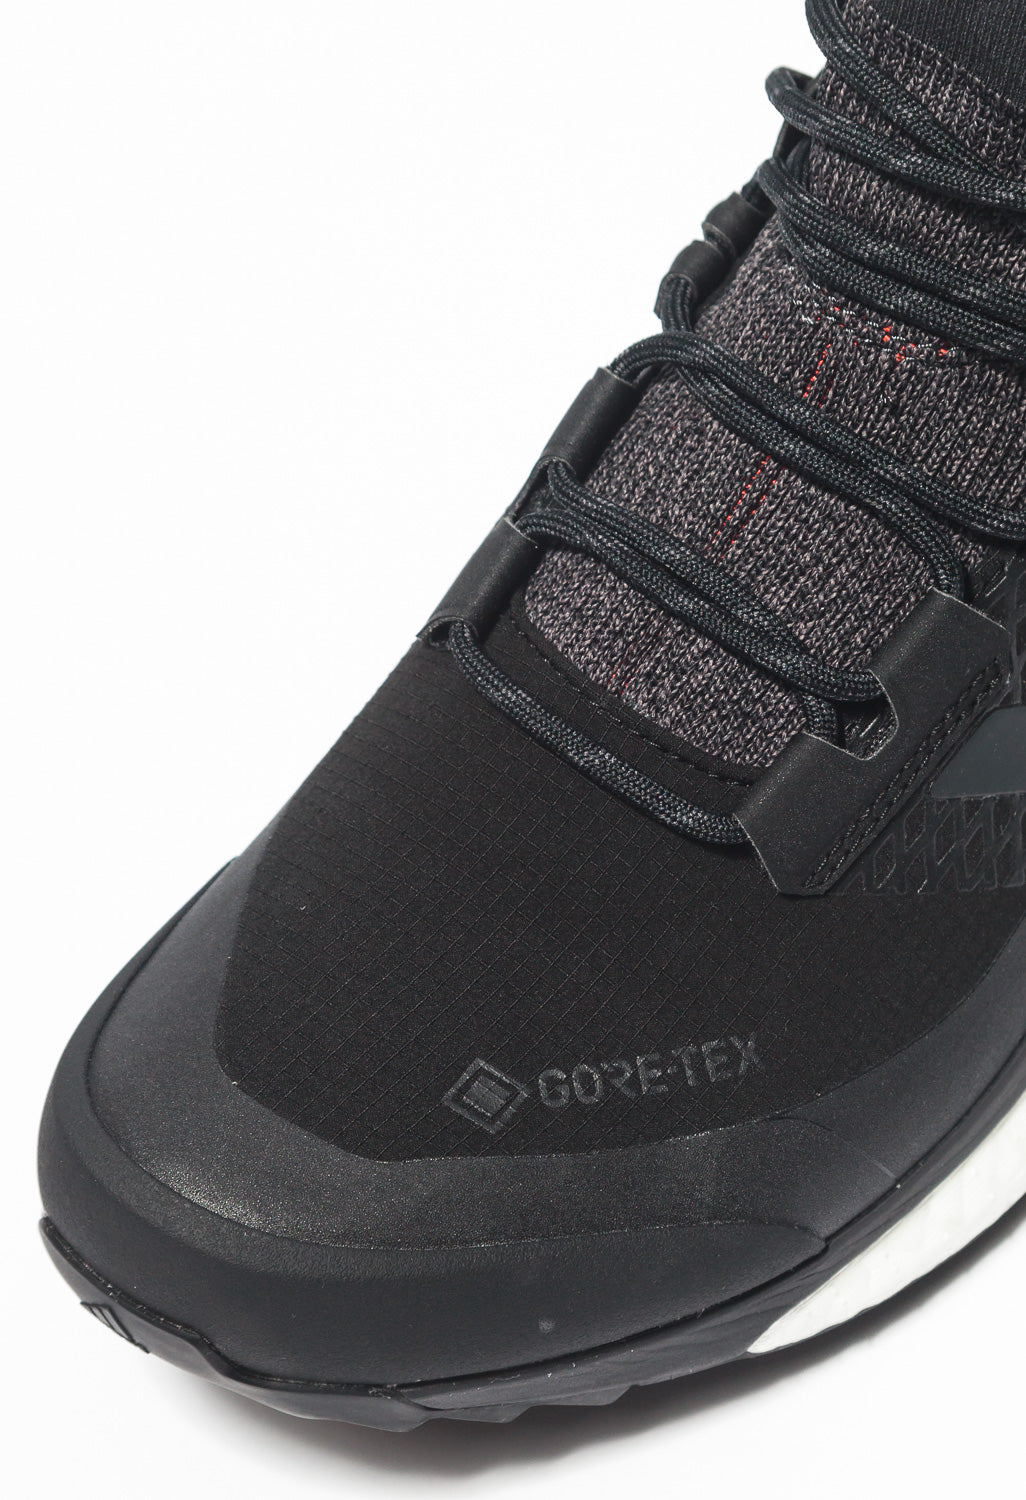 adidas Terrex Free Hiker GORE-TEX Men's Boots - Core Black/Grey Three F17/Active Orange